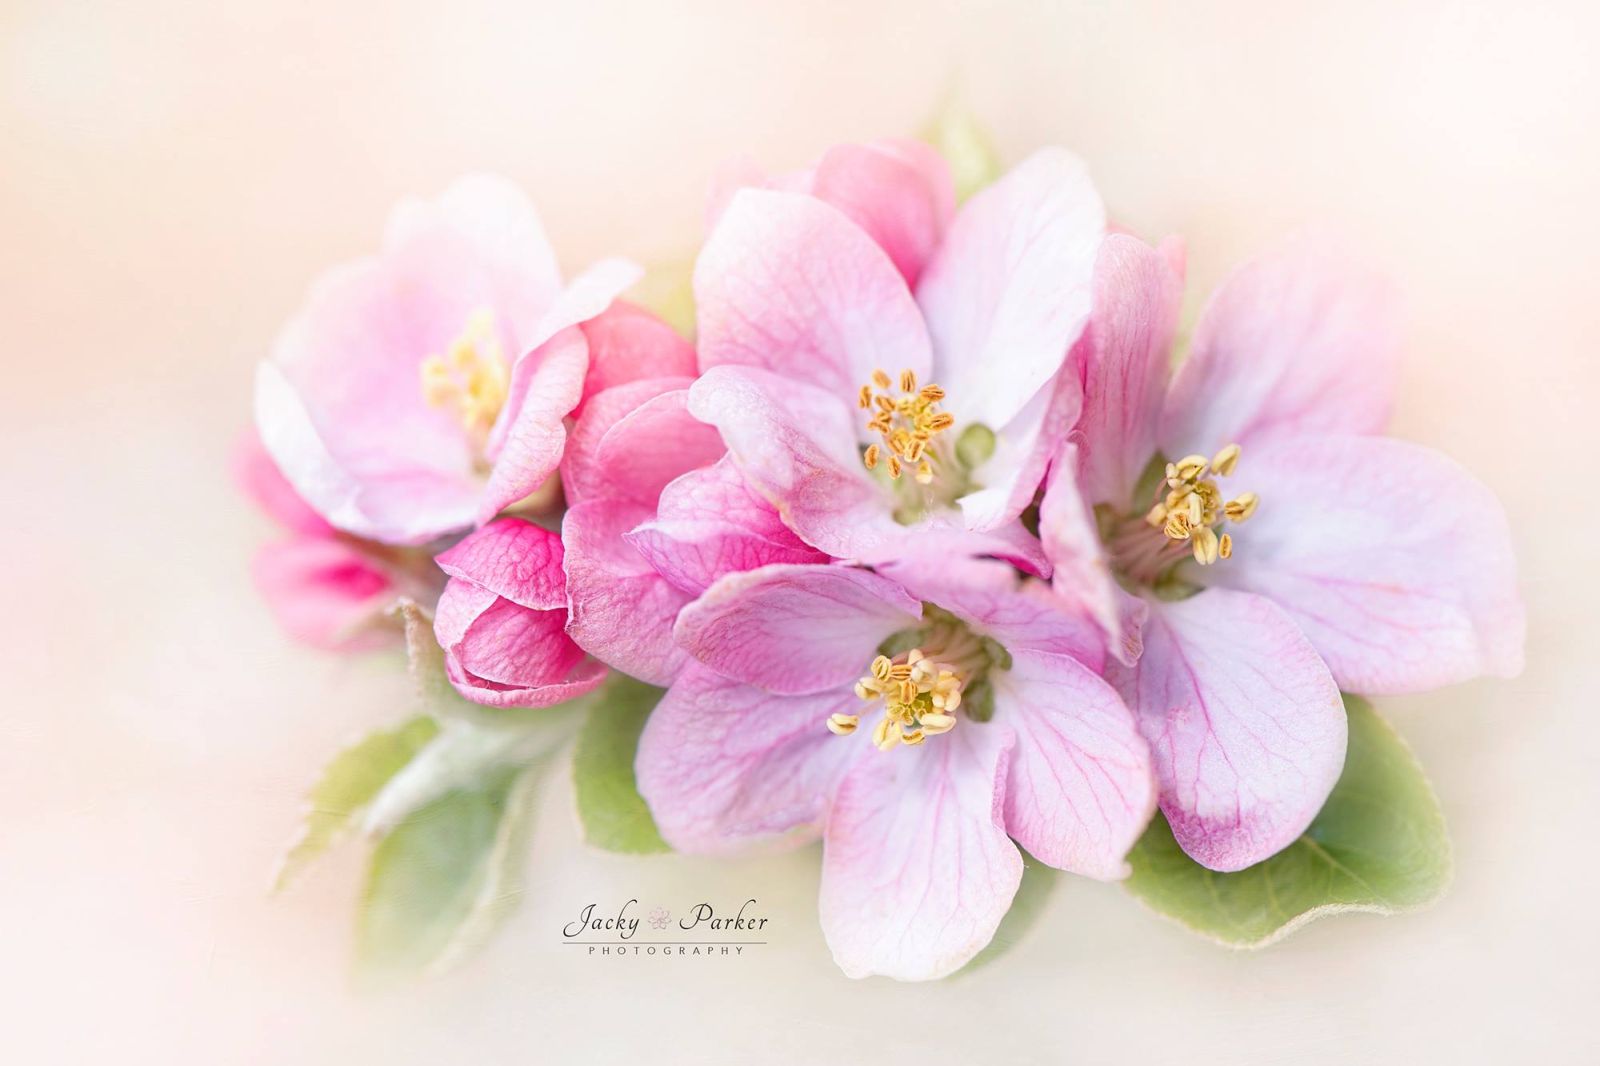 beautiful flower photography by jacky parker